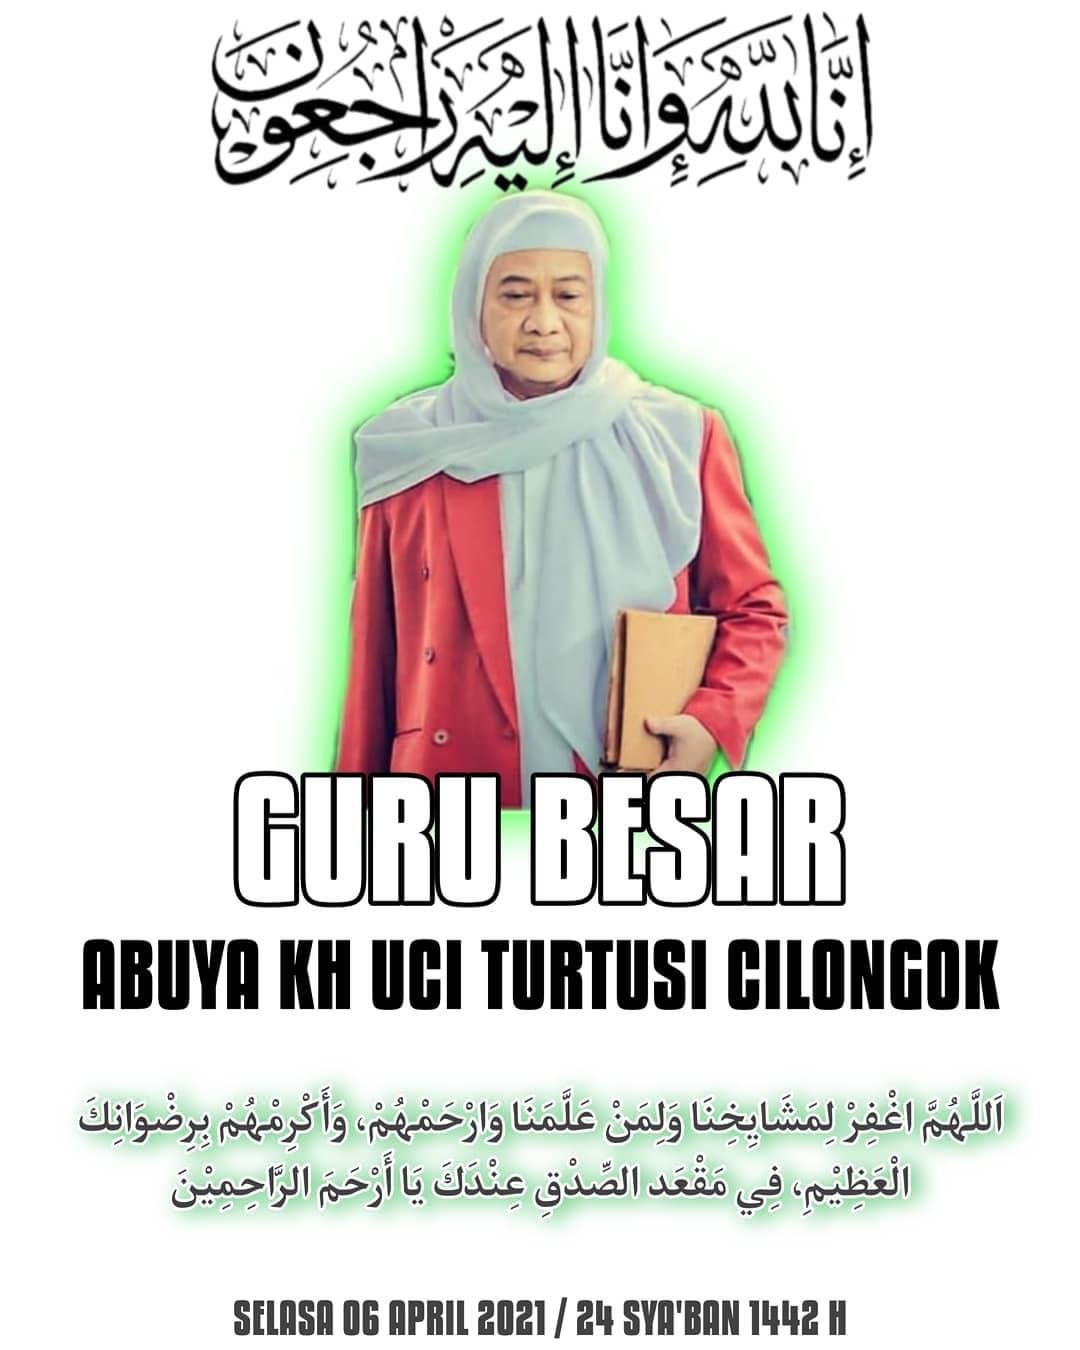 Turut Berduka atas Wafatnya Abuya KH. Uci Turtusi